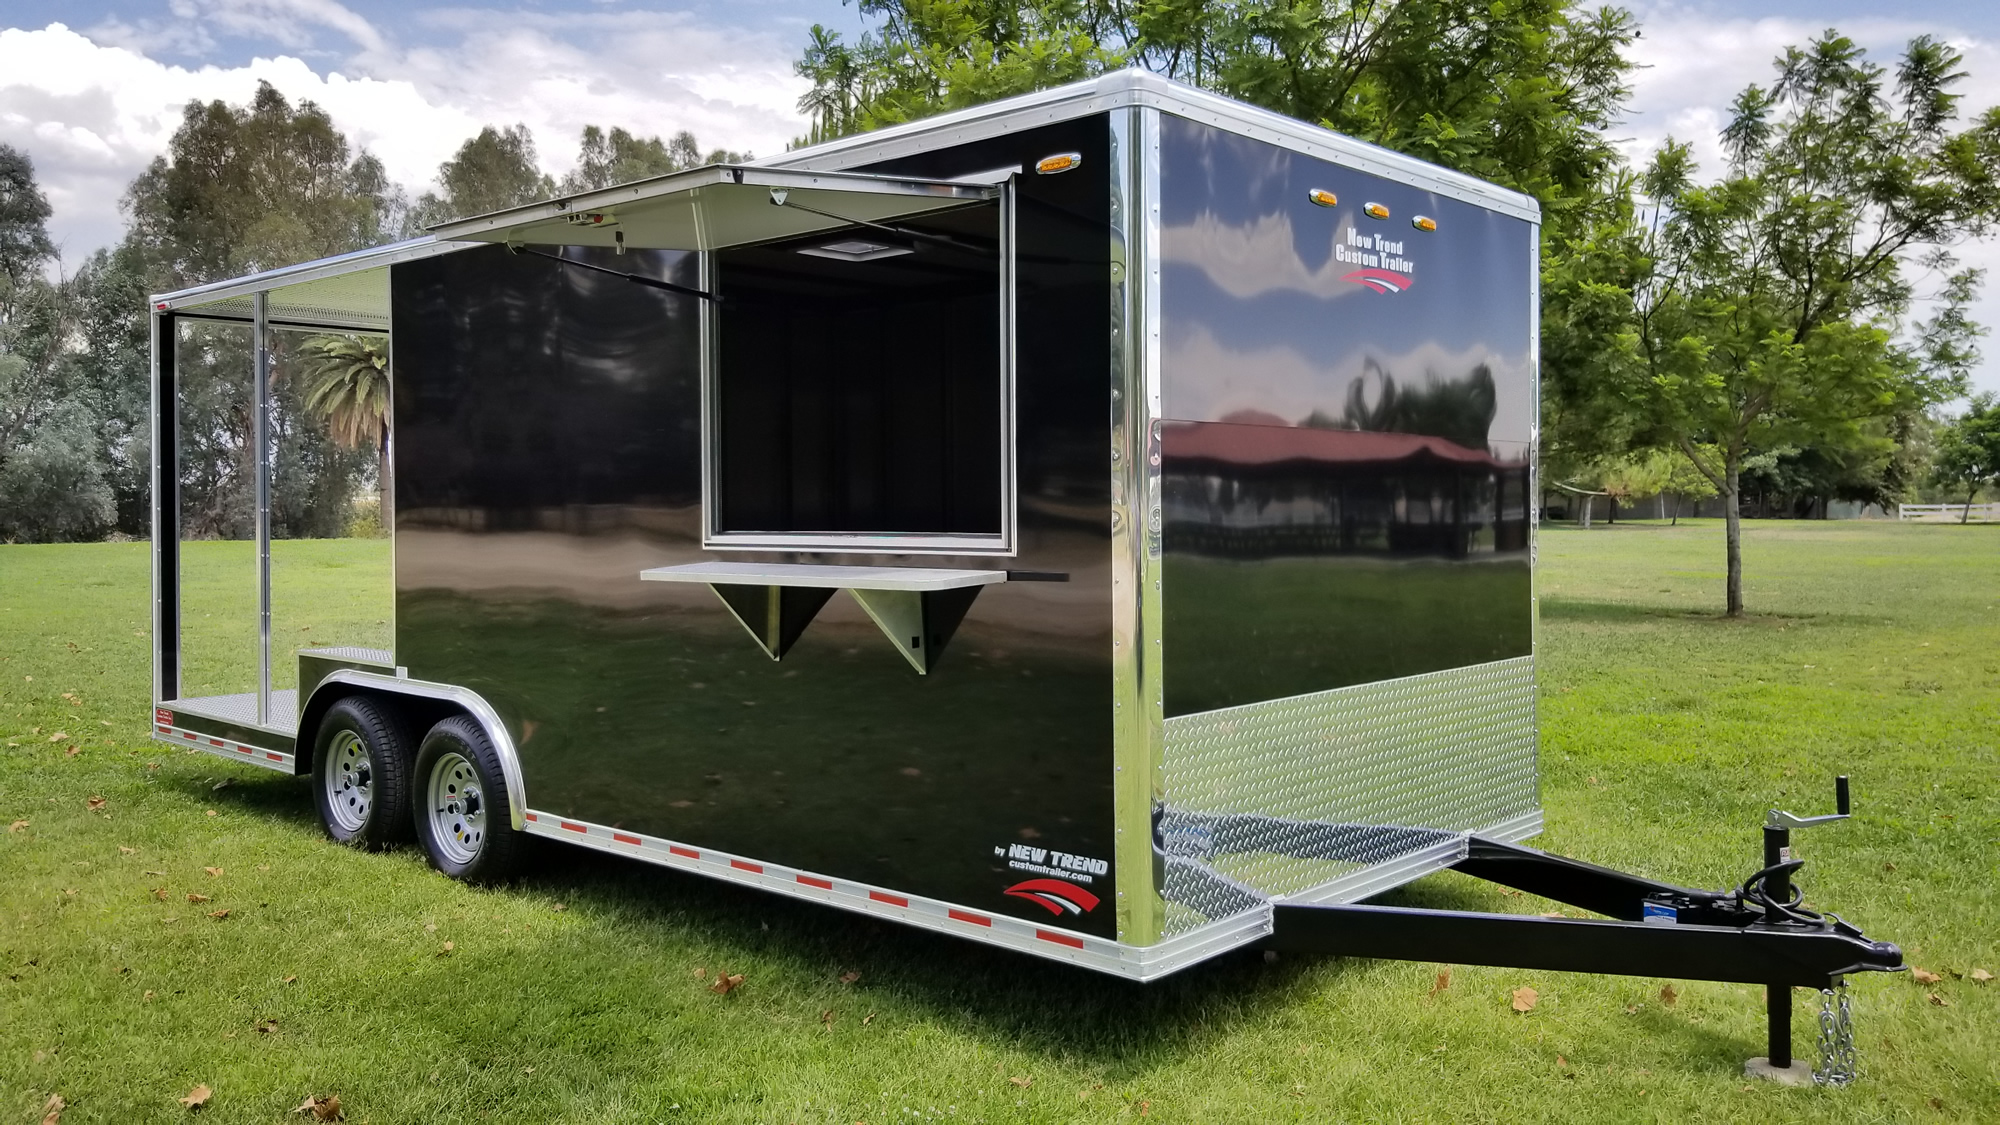 Large black enclosed trailer